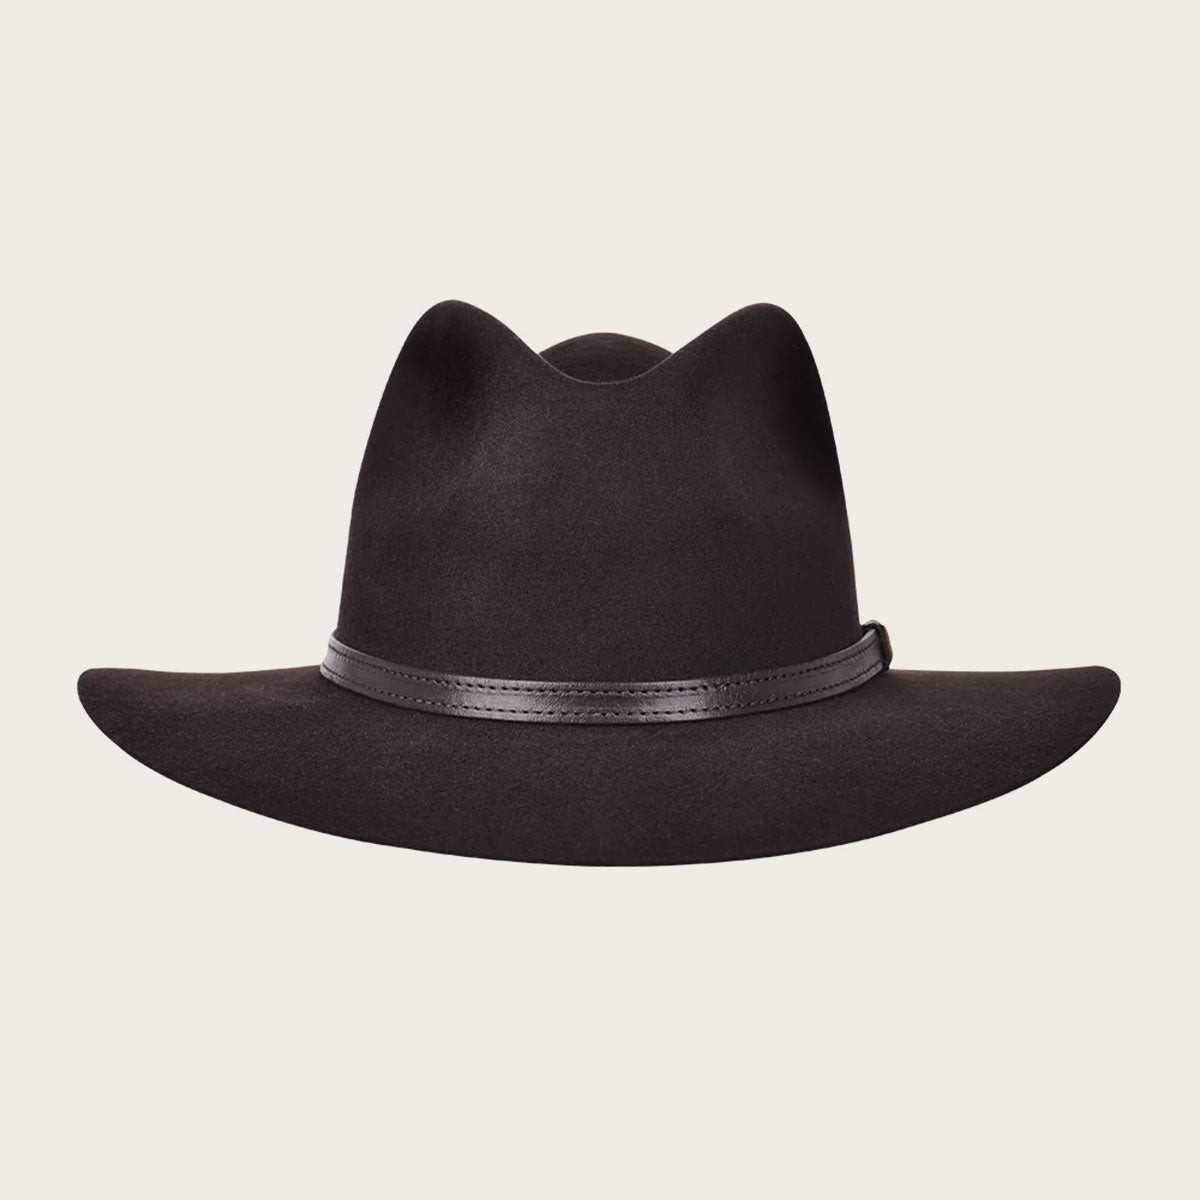 Cuadra dark brown fur hat with leather headband